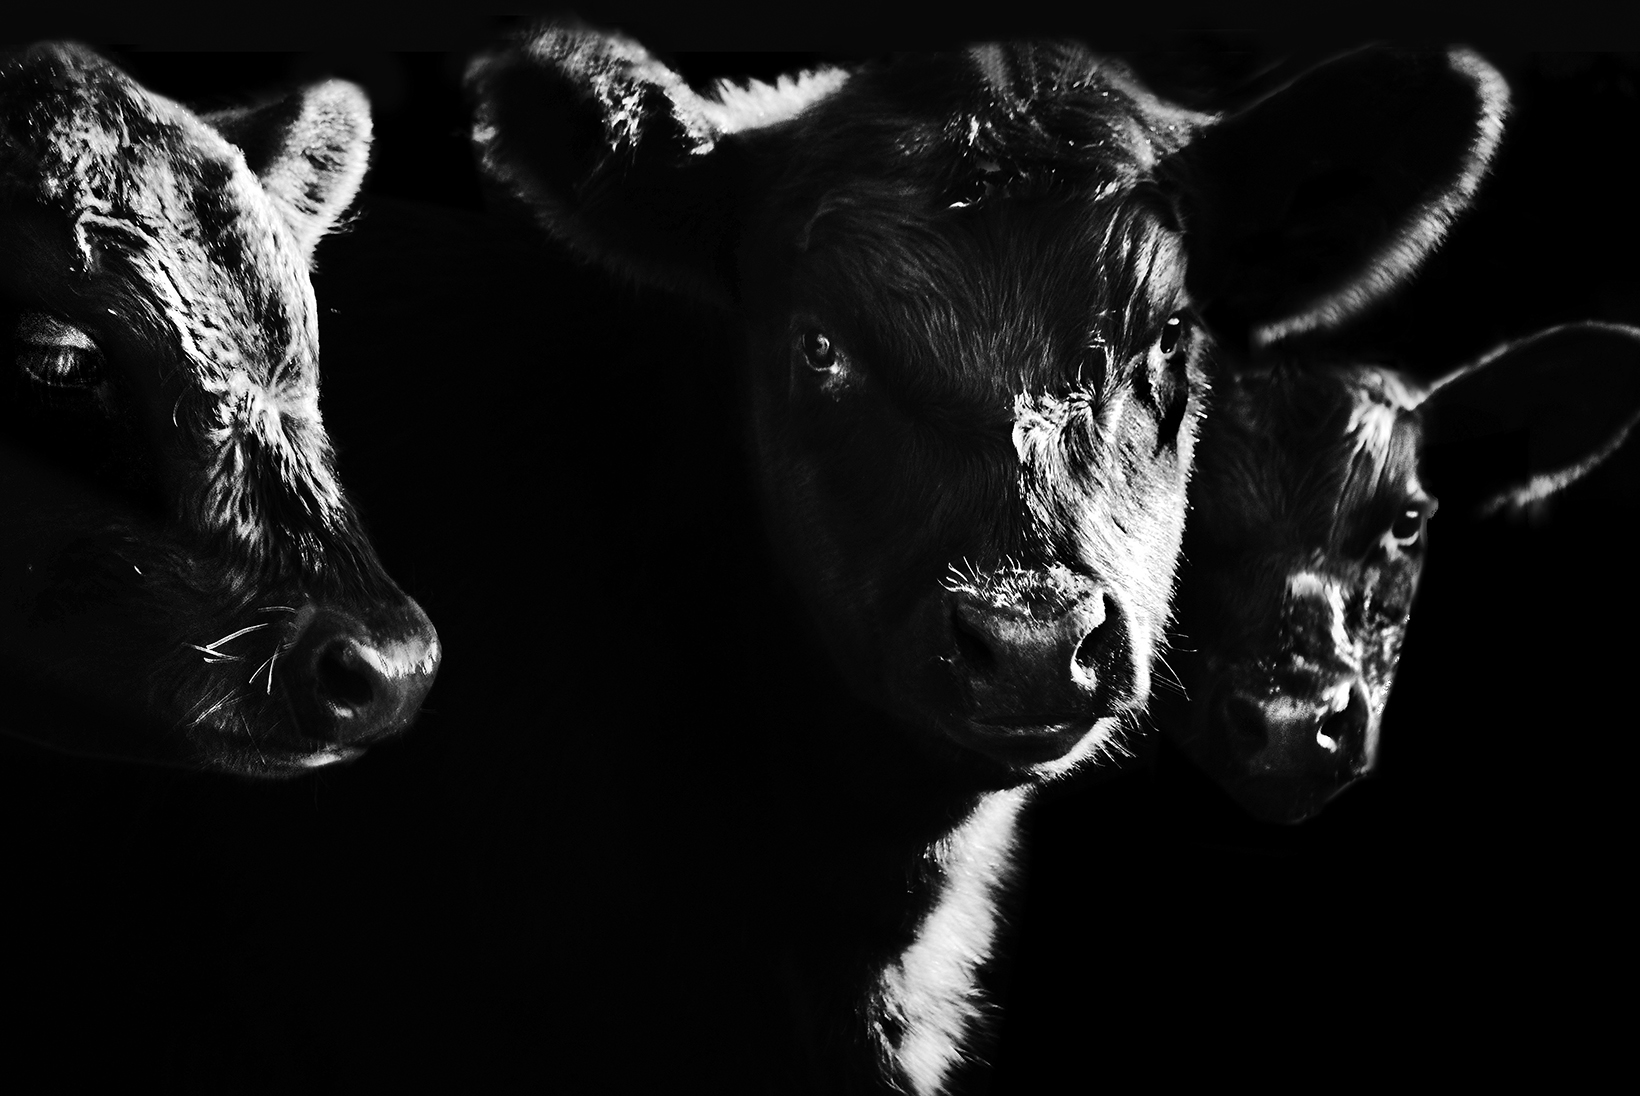 Night Cows